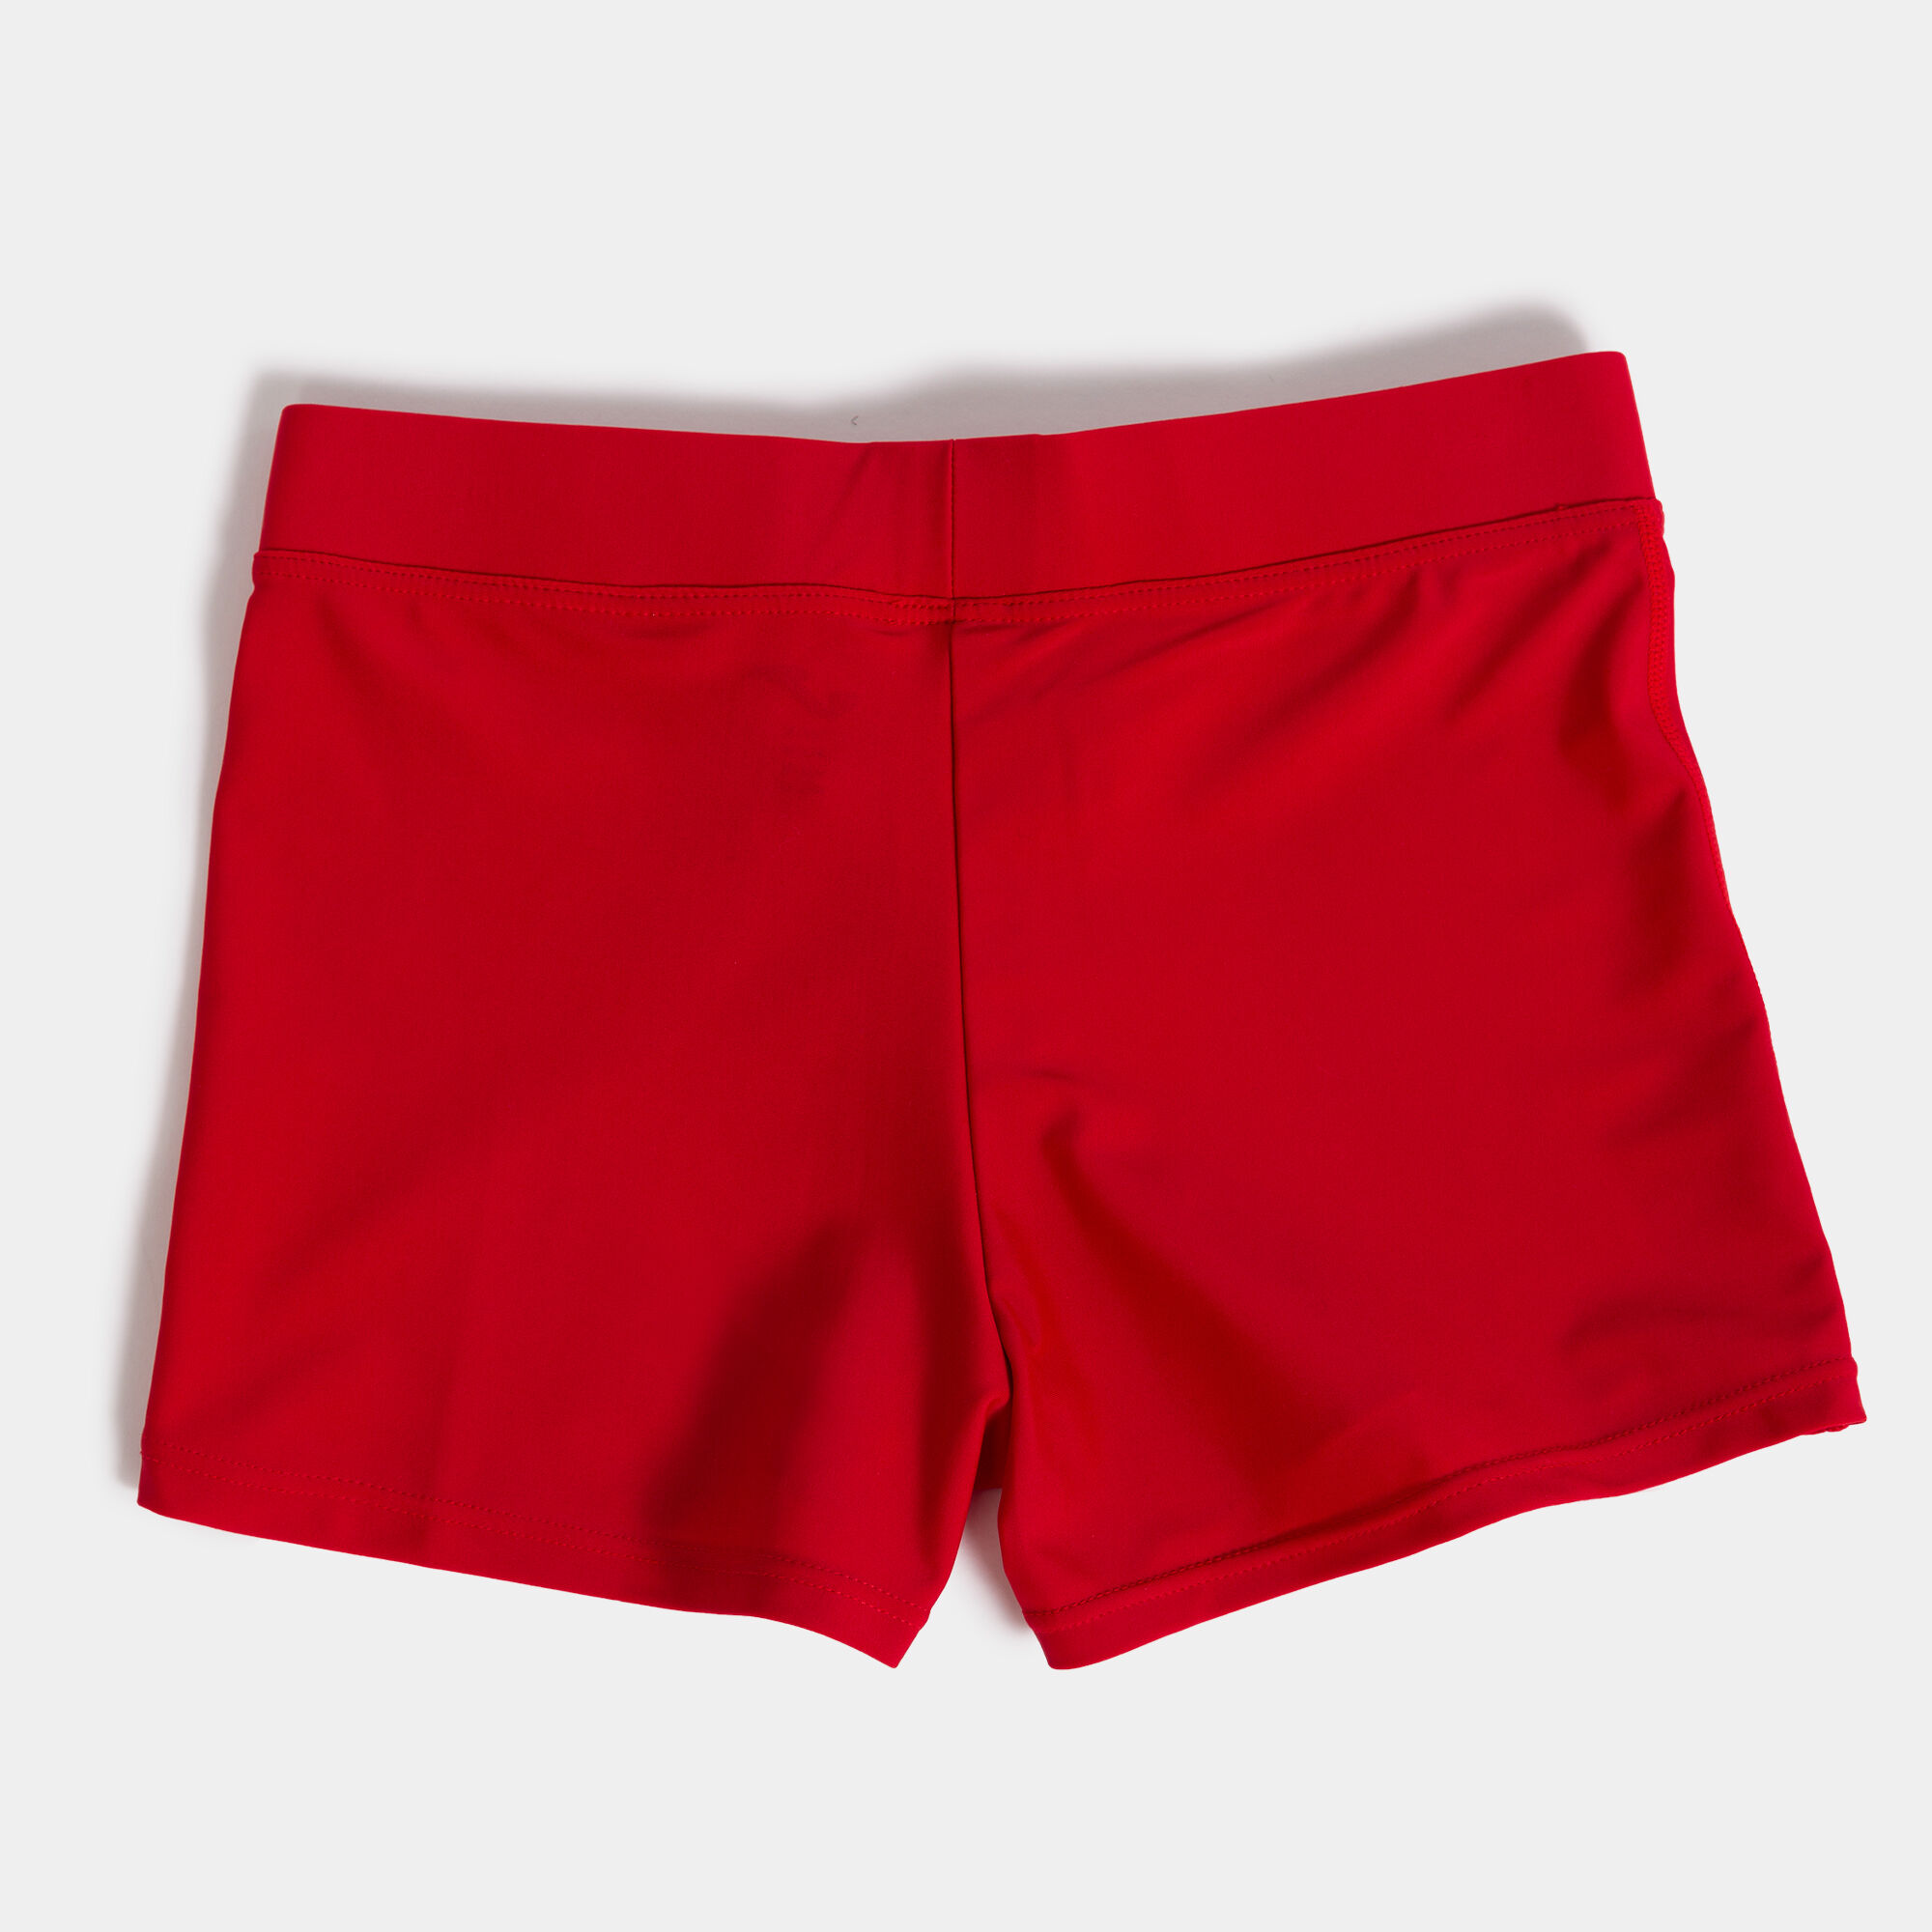 Swimming shorts man Shark red white